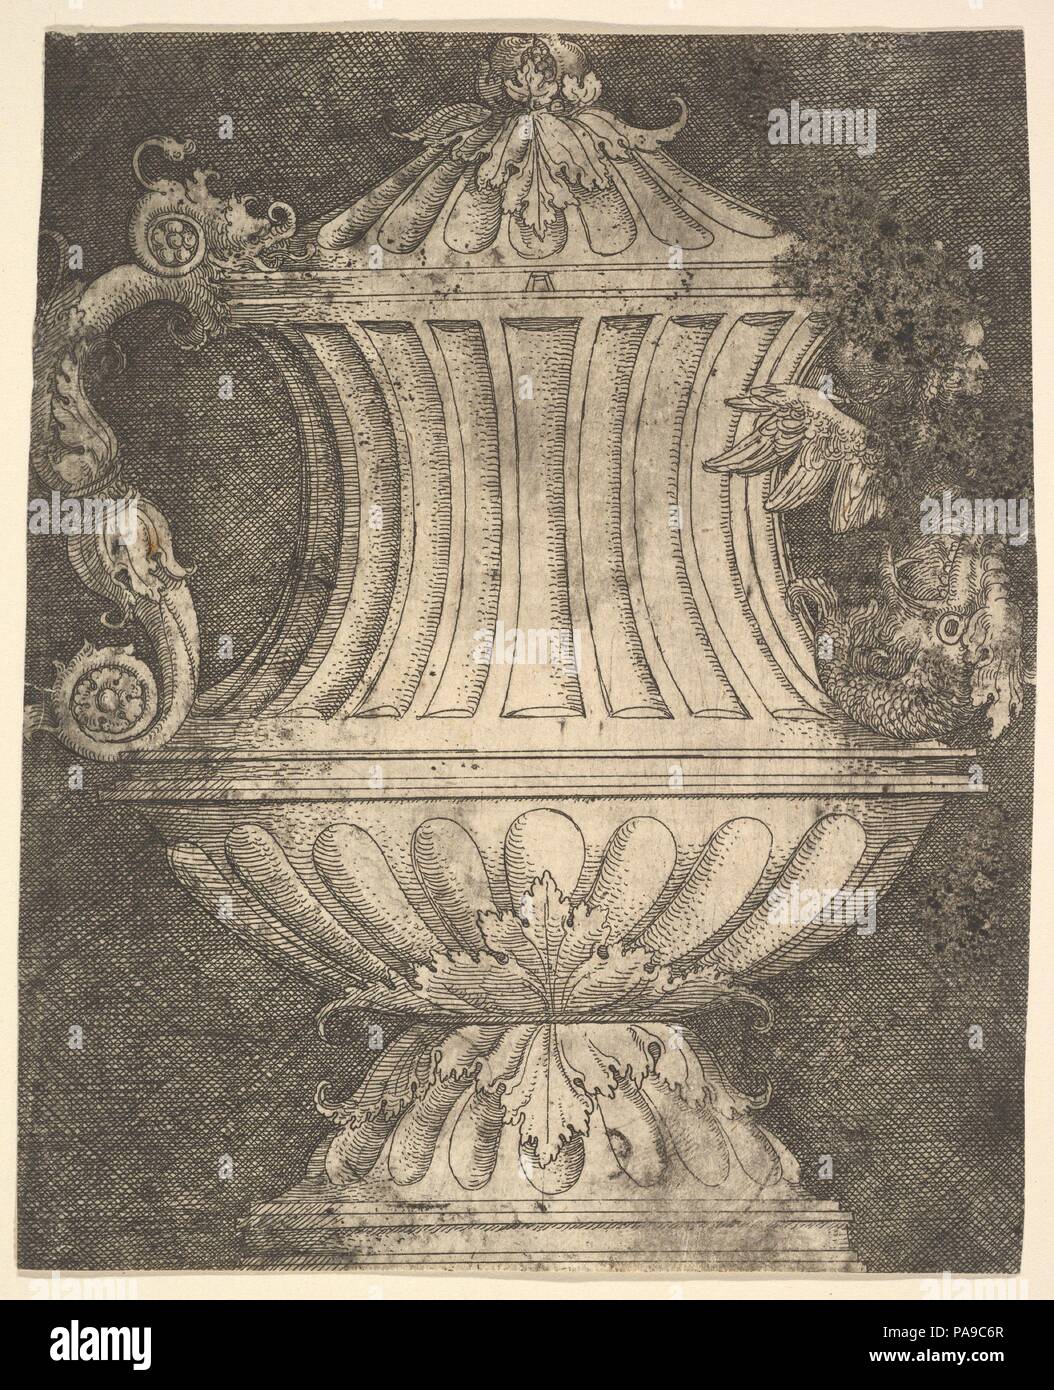 Ewer with a Siren. Artist: Albrecht Altdorfer (German, Regensburg ca. 1480-1538 Regensburg). Dimensions: Sheet: 6 x 4 15/16 in. (15.2 x 12.5 cm). Date: n.d.. Museum: Metropolitan Museum of Art, New York, USA. Stock Photo